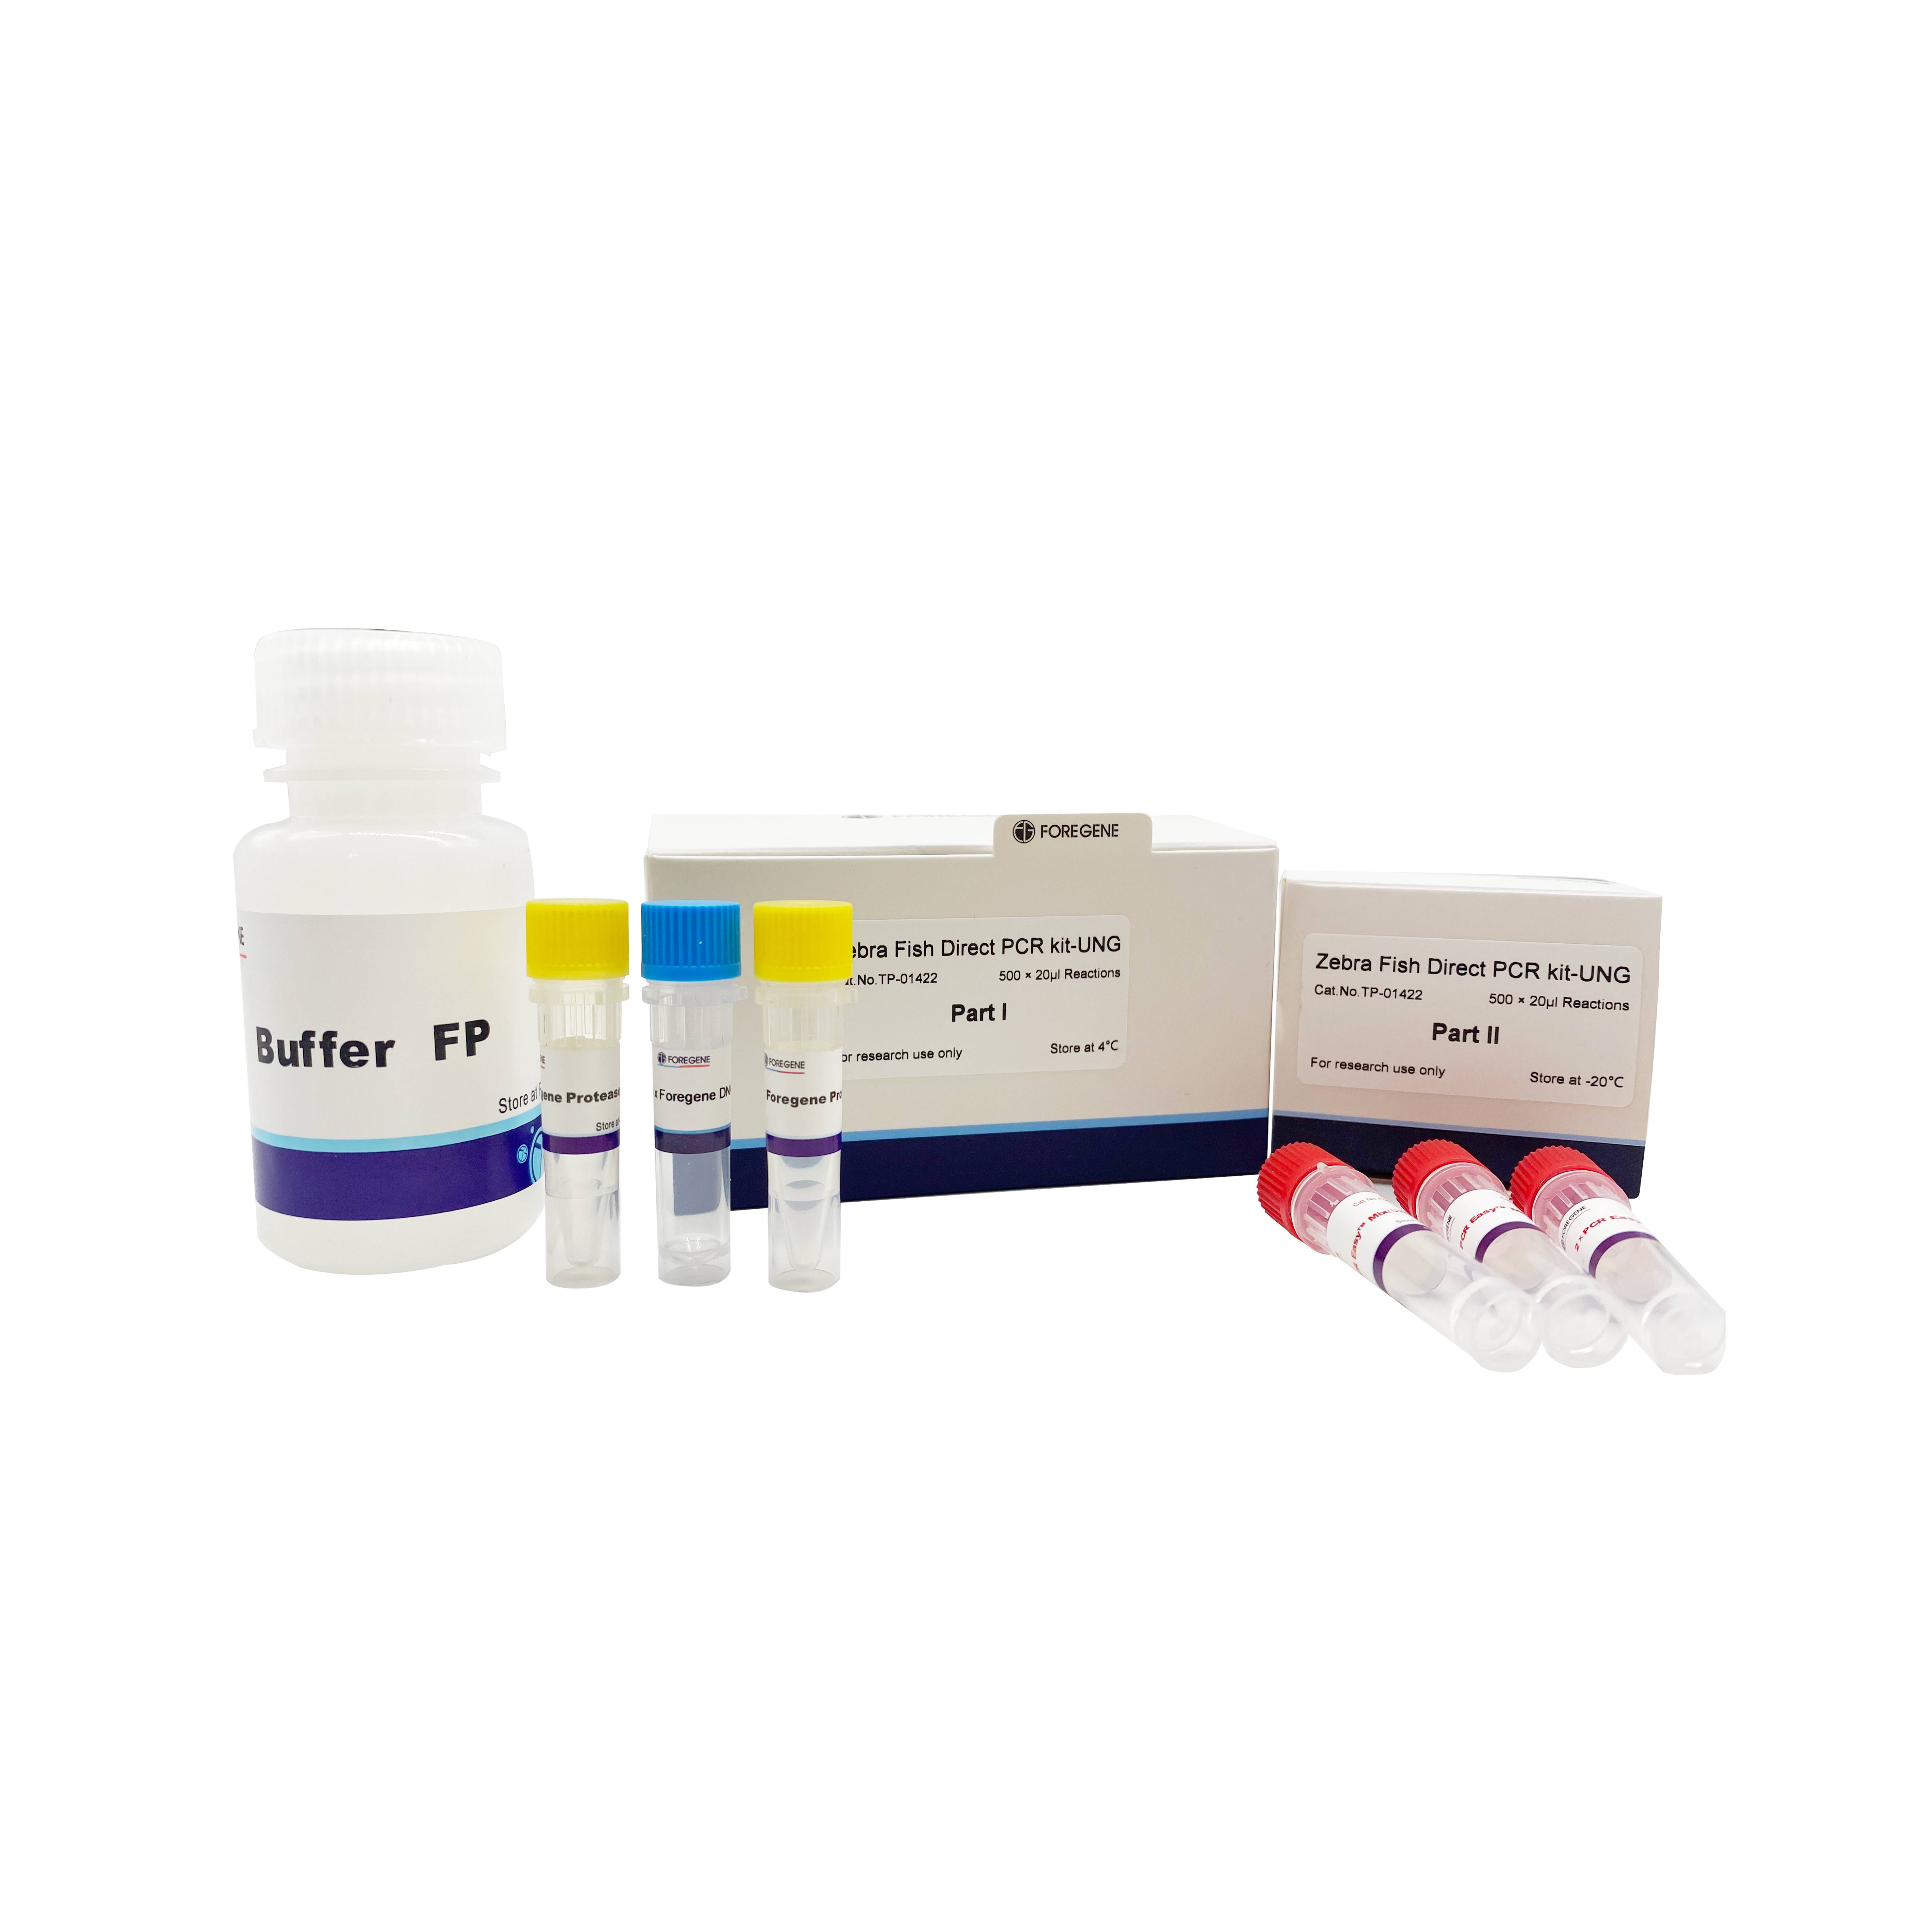 Zebra Fish Direct PCR Kit-UNG Direct PCR reagens za lizu (zebrafish)